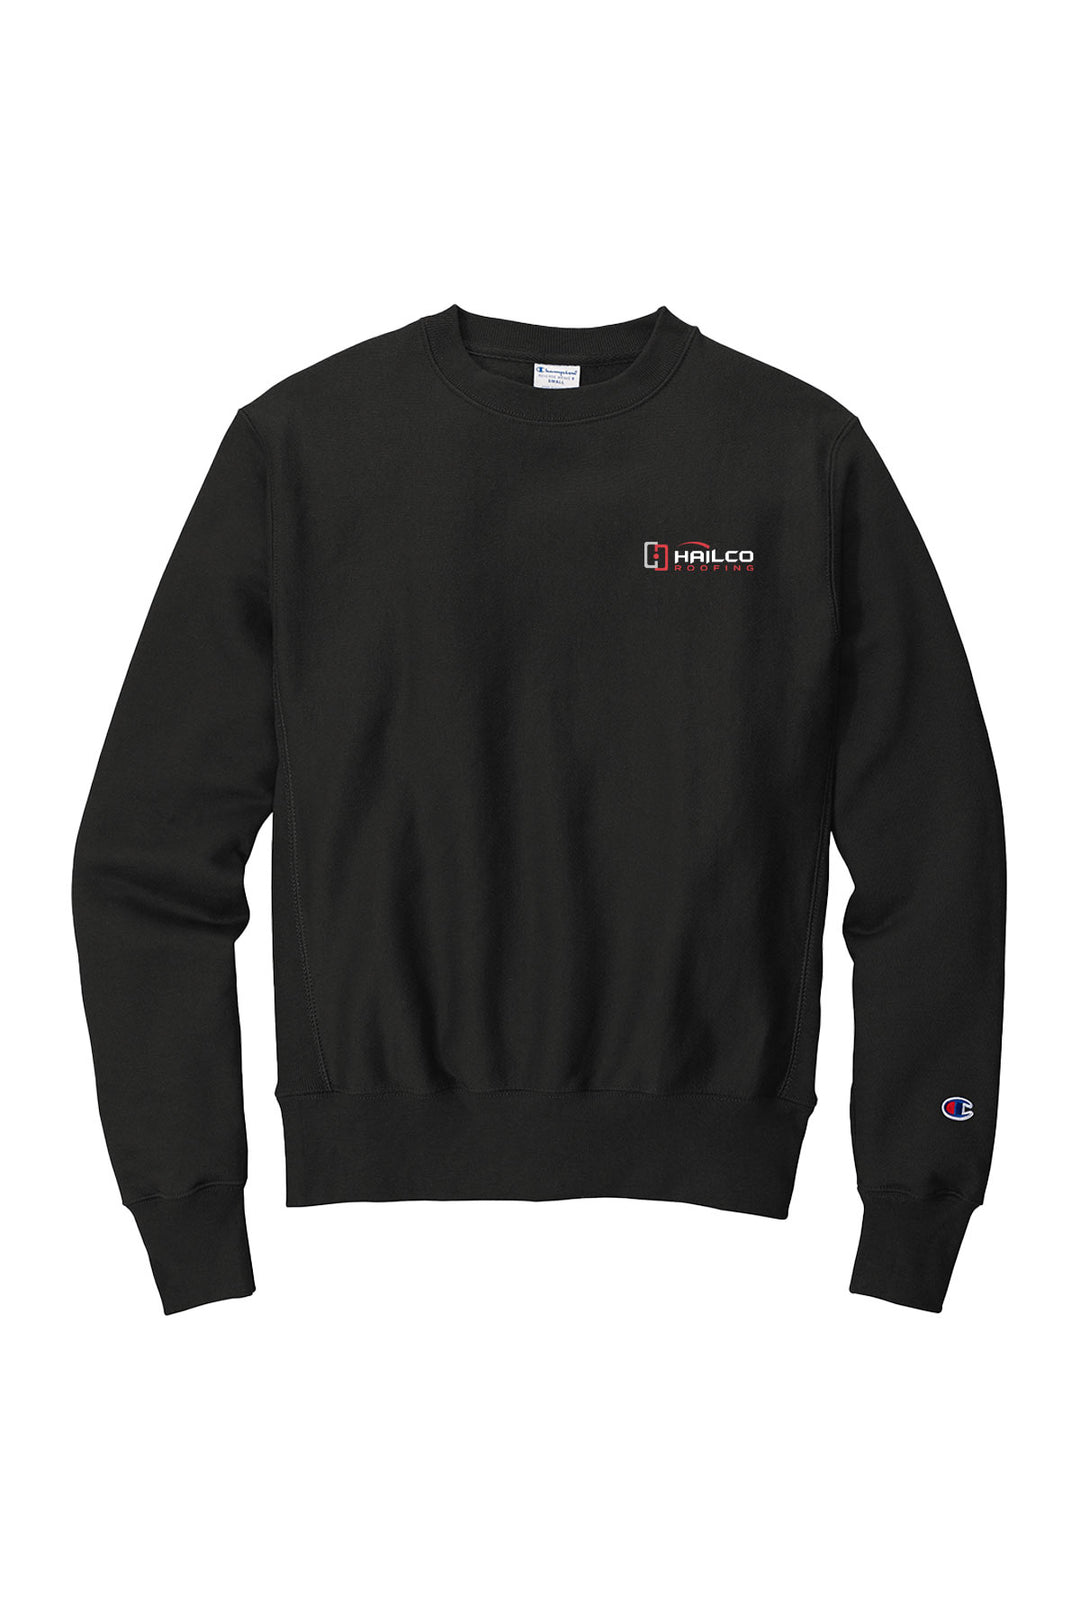 Reverse Weave Crewneck Sweatshirt